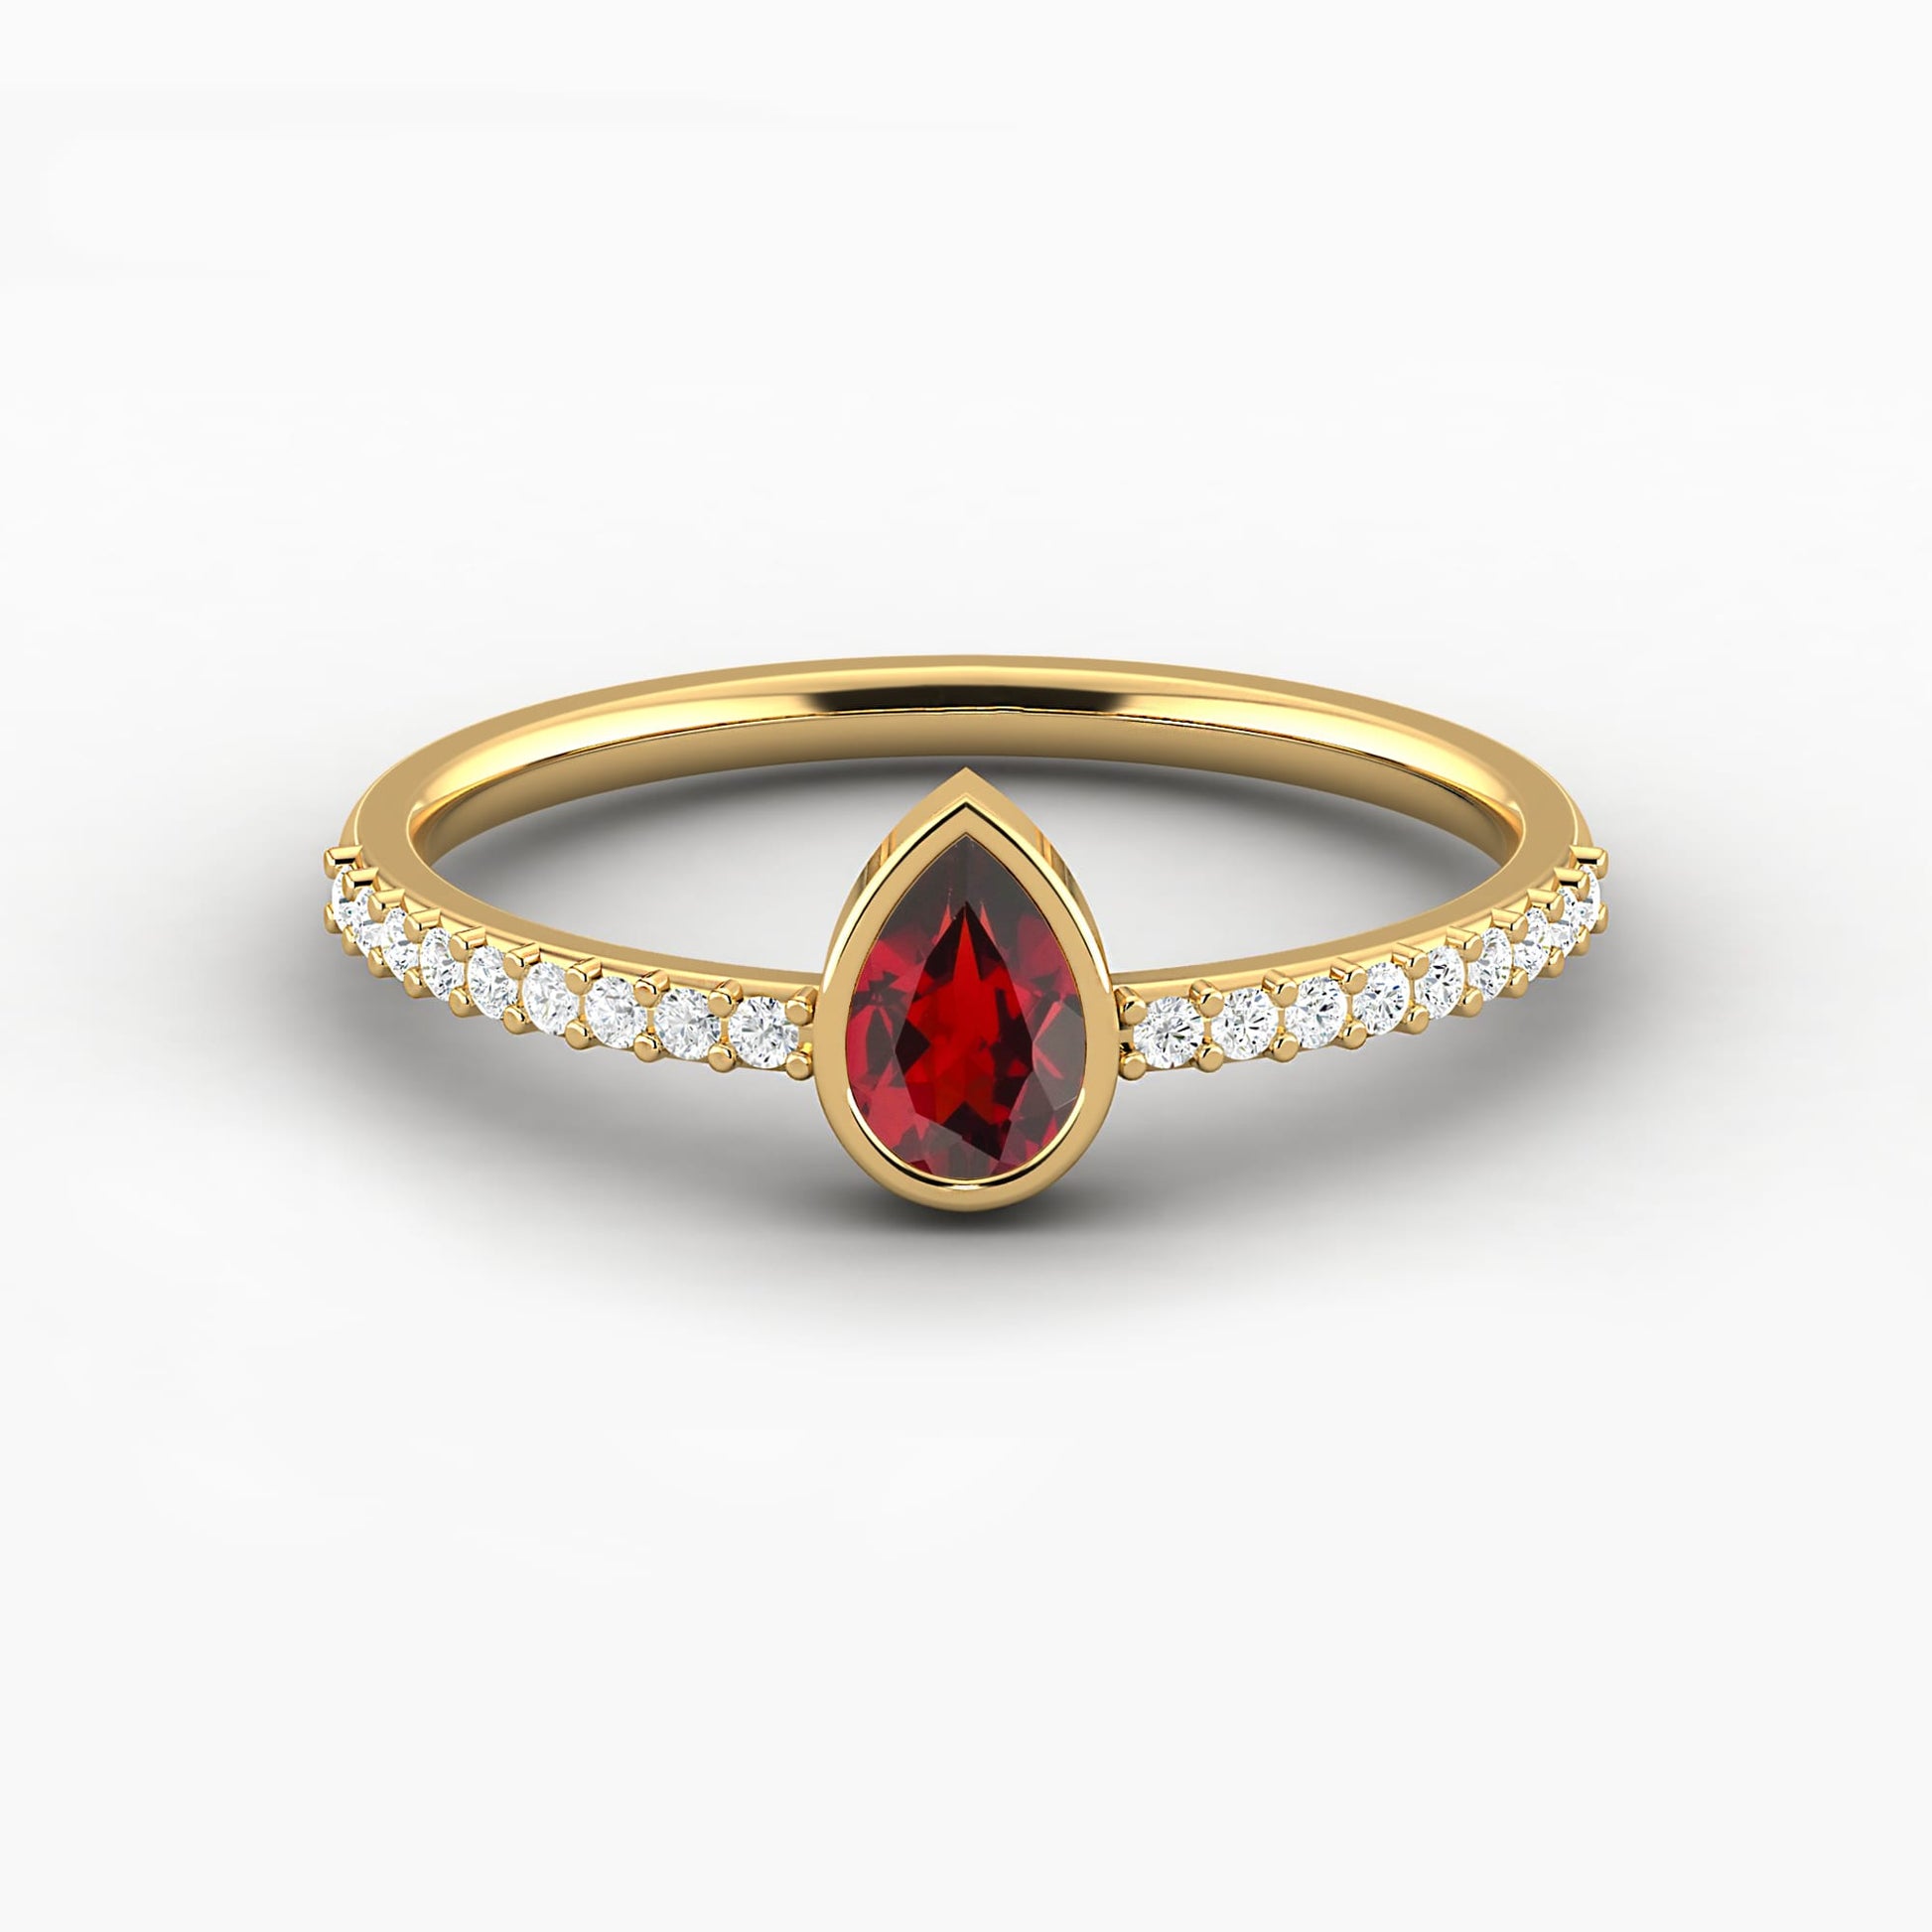 Garnet gemstone ring